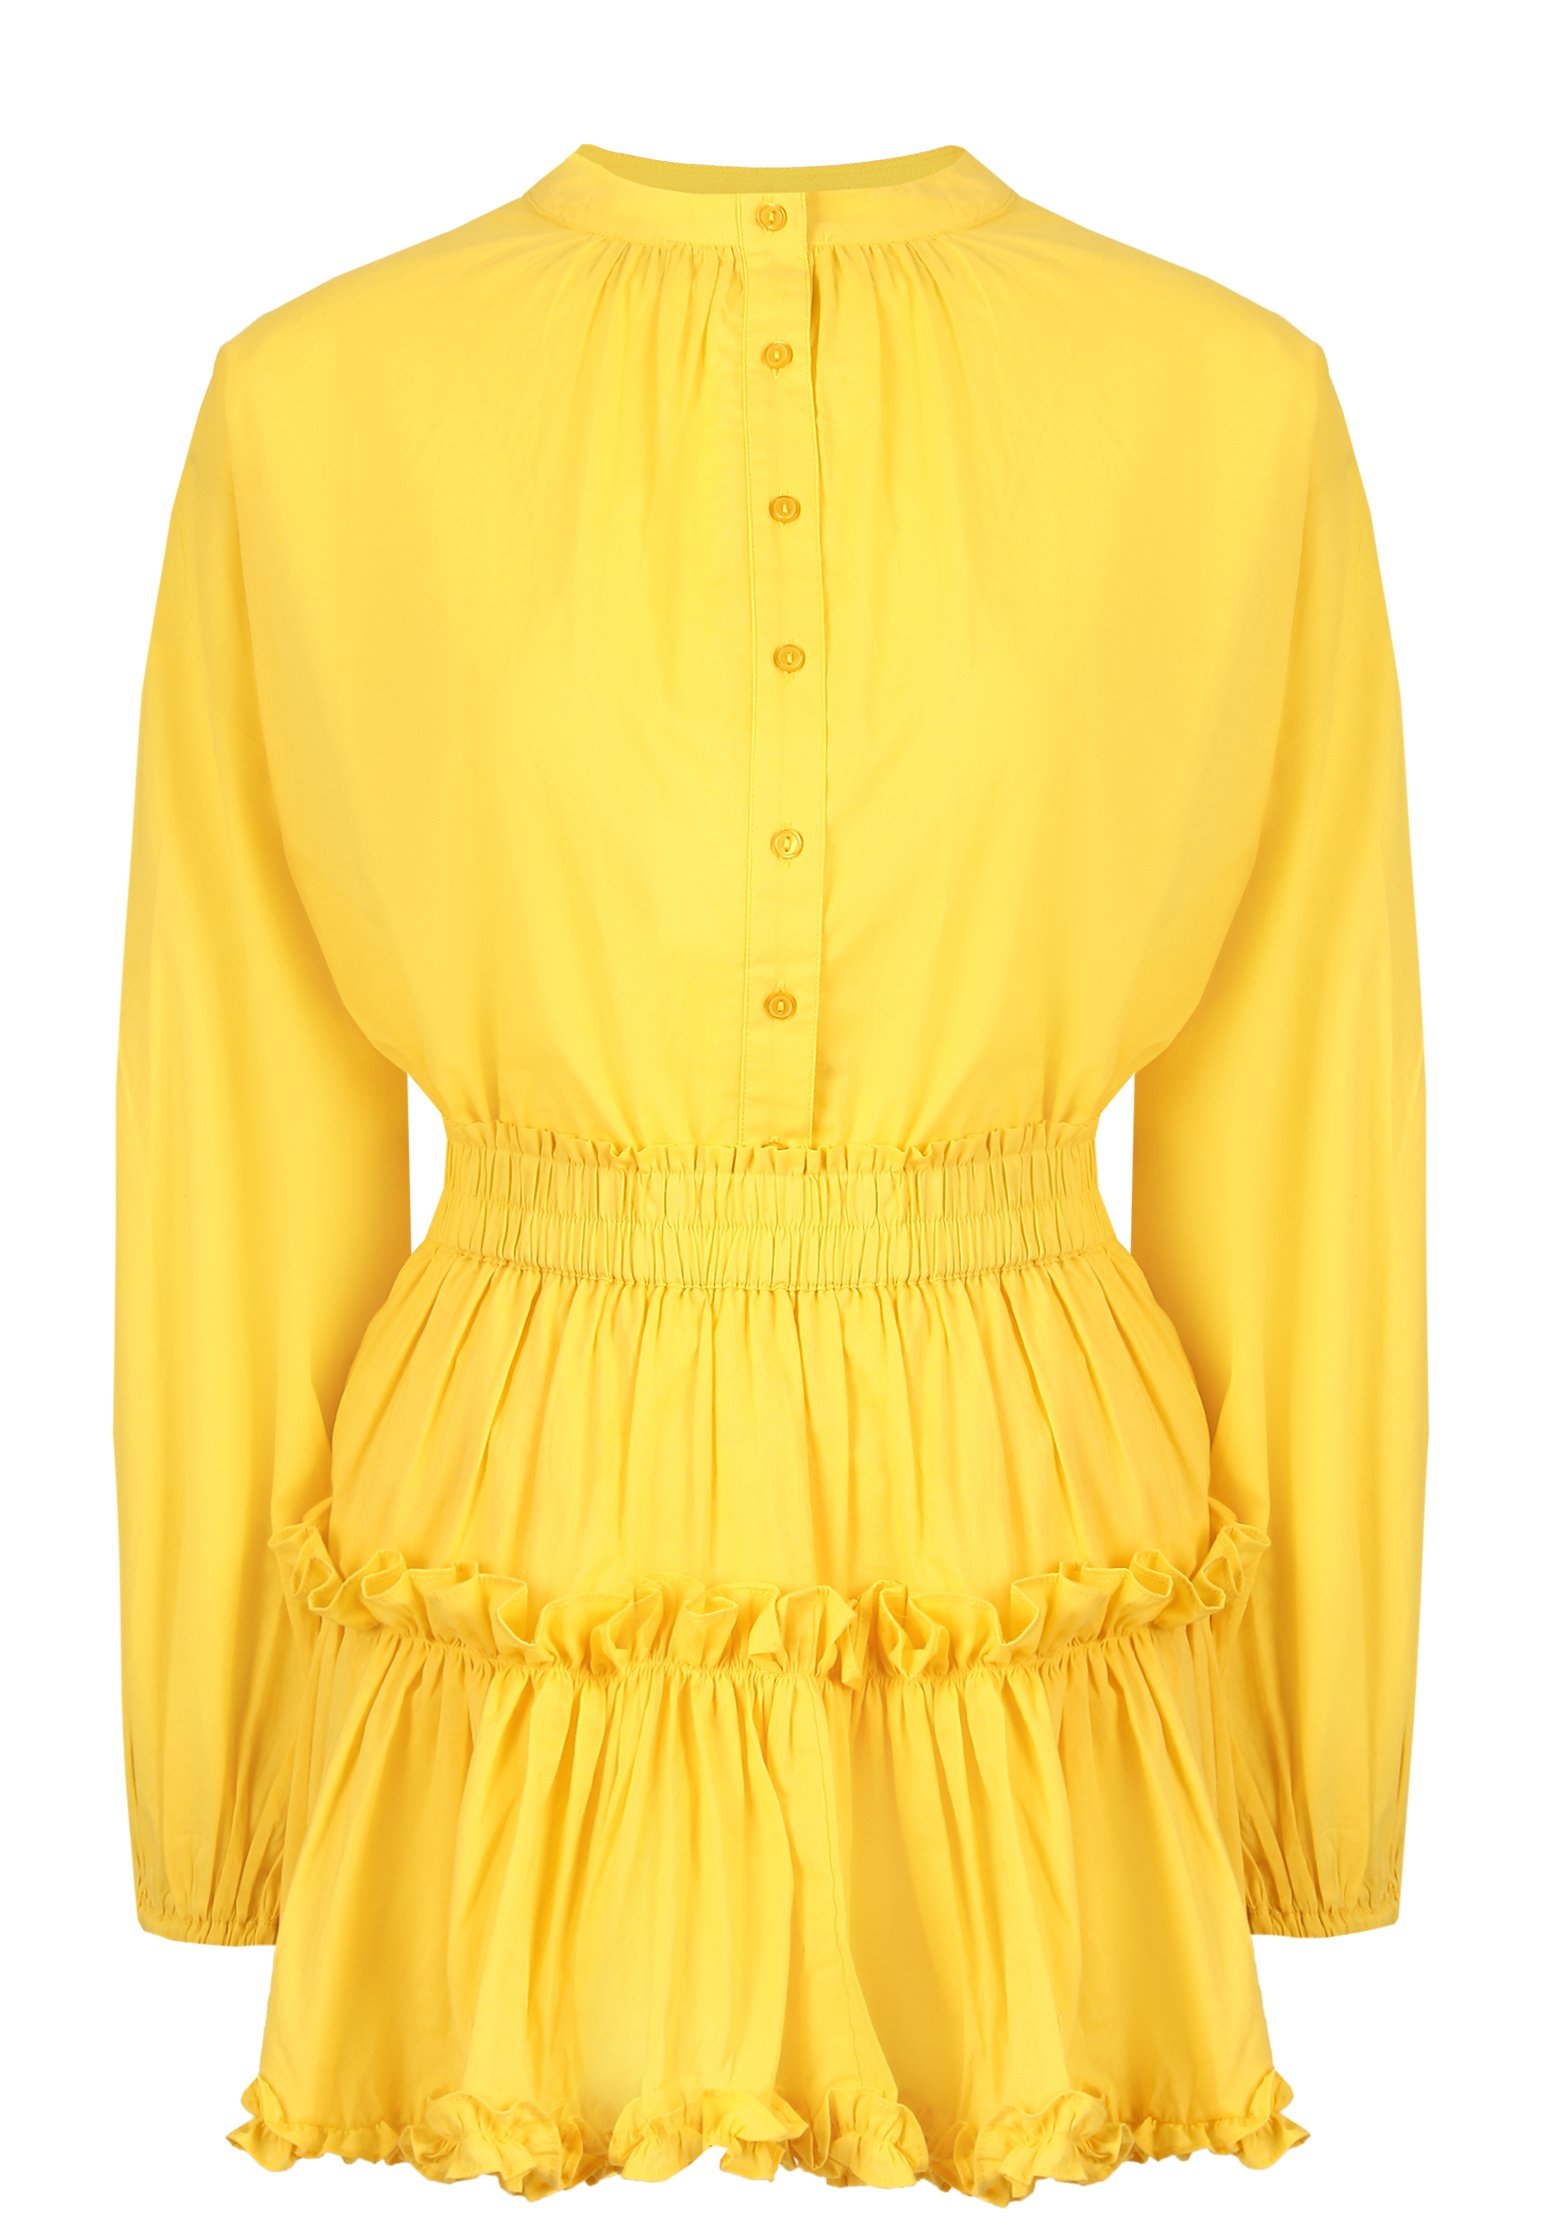 Costume MAIA BERGMAN Color: yellow (Code: 1030) in online store Allure